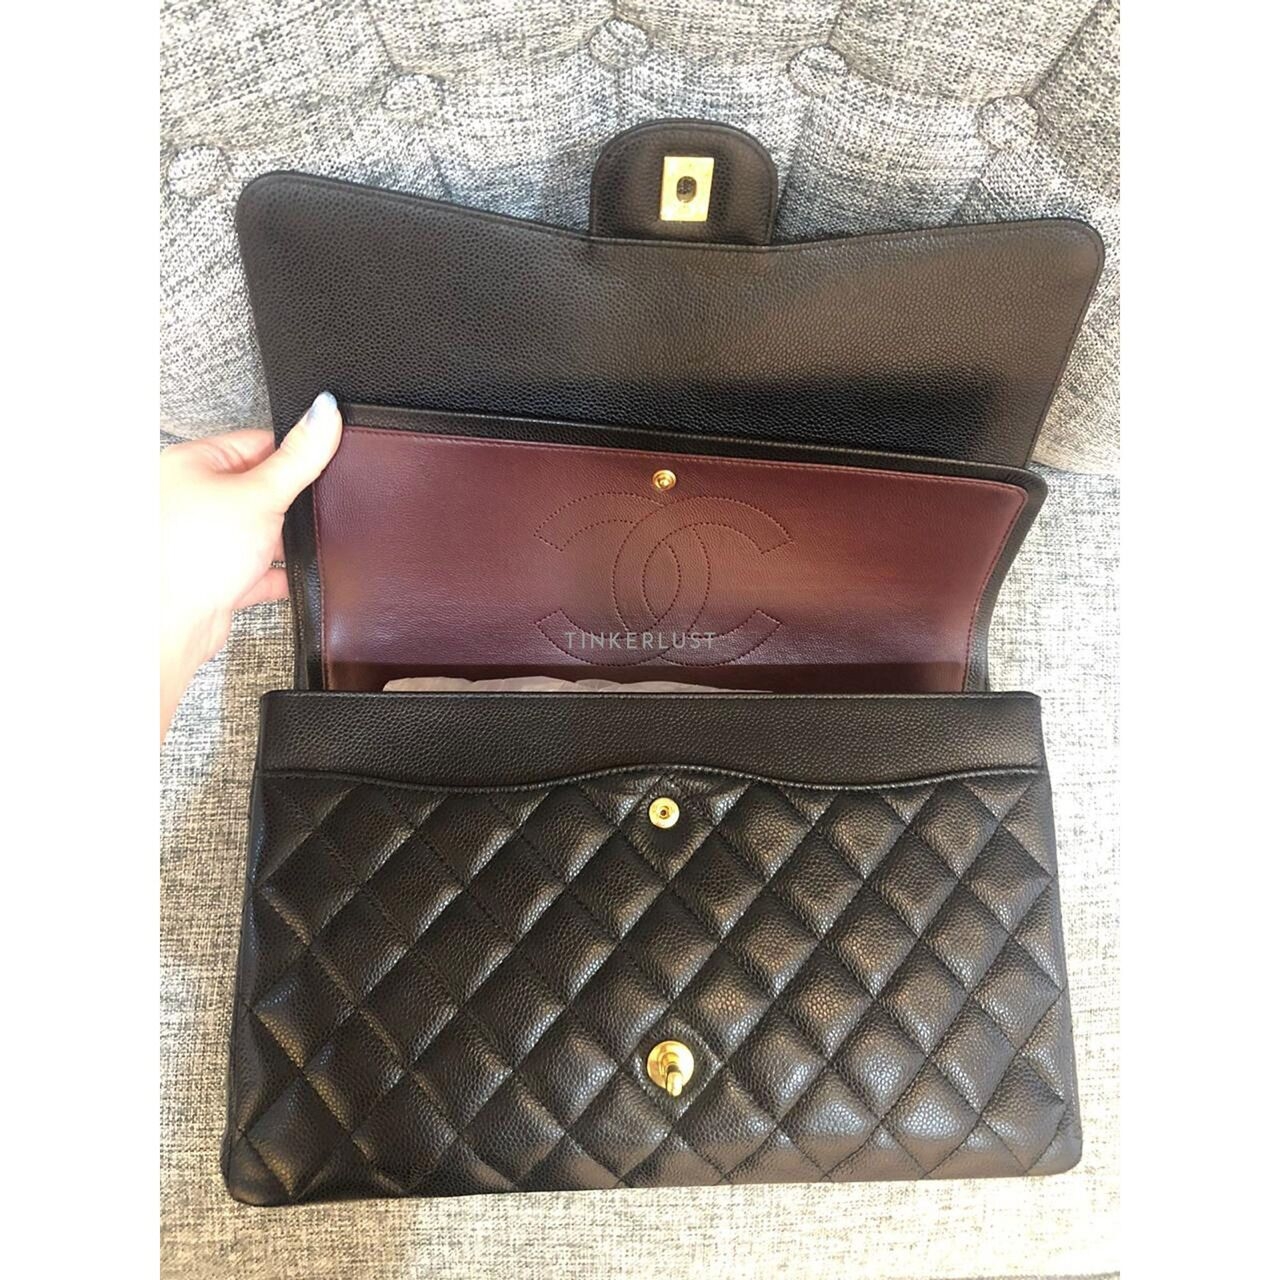 Chanel Classic Maxi Black Caviar Double Flap GHW #26 Shoulder Bag